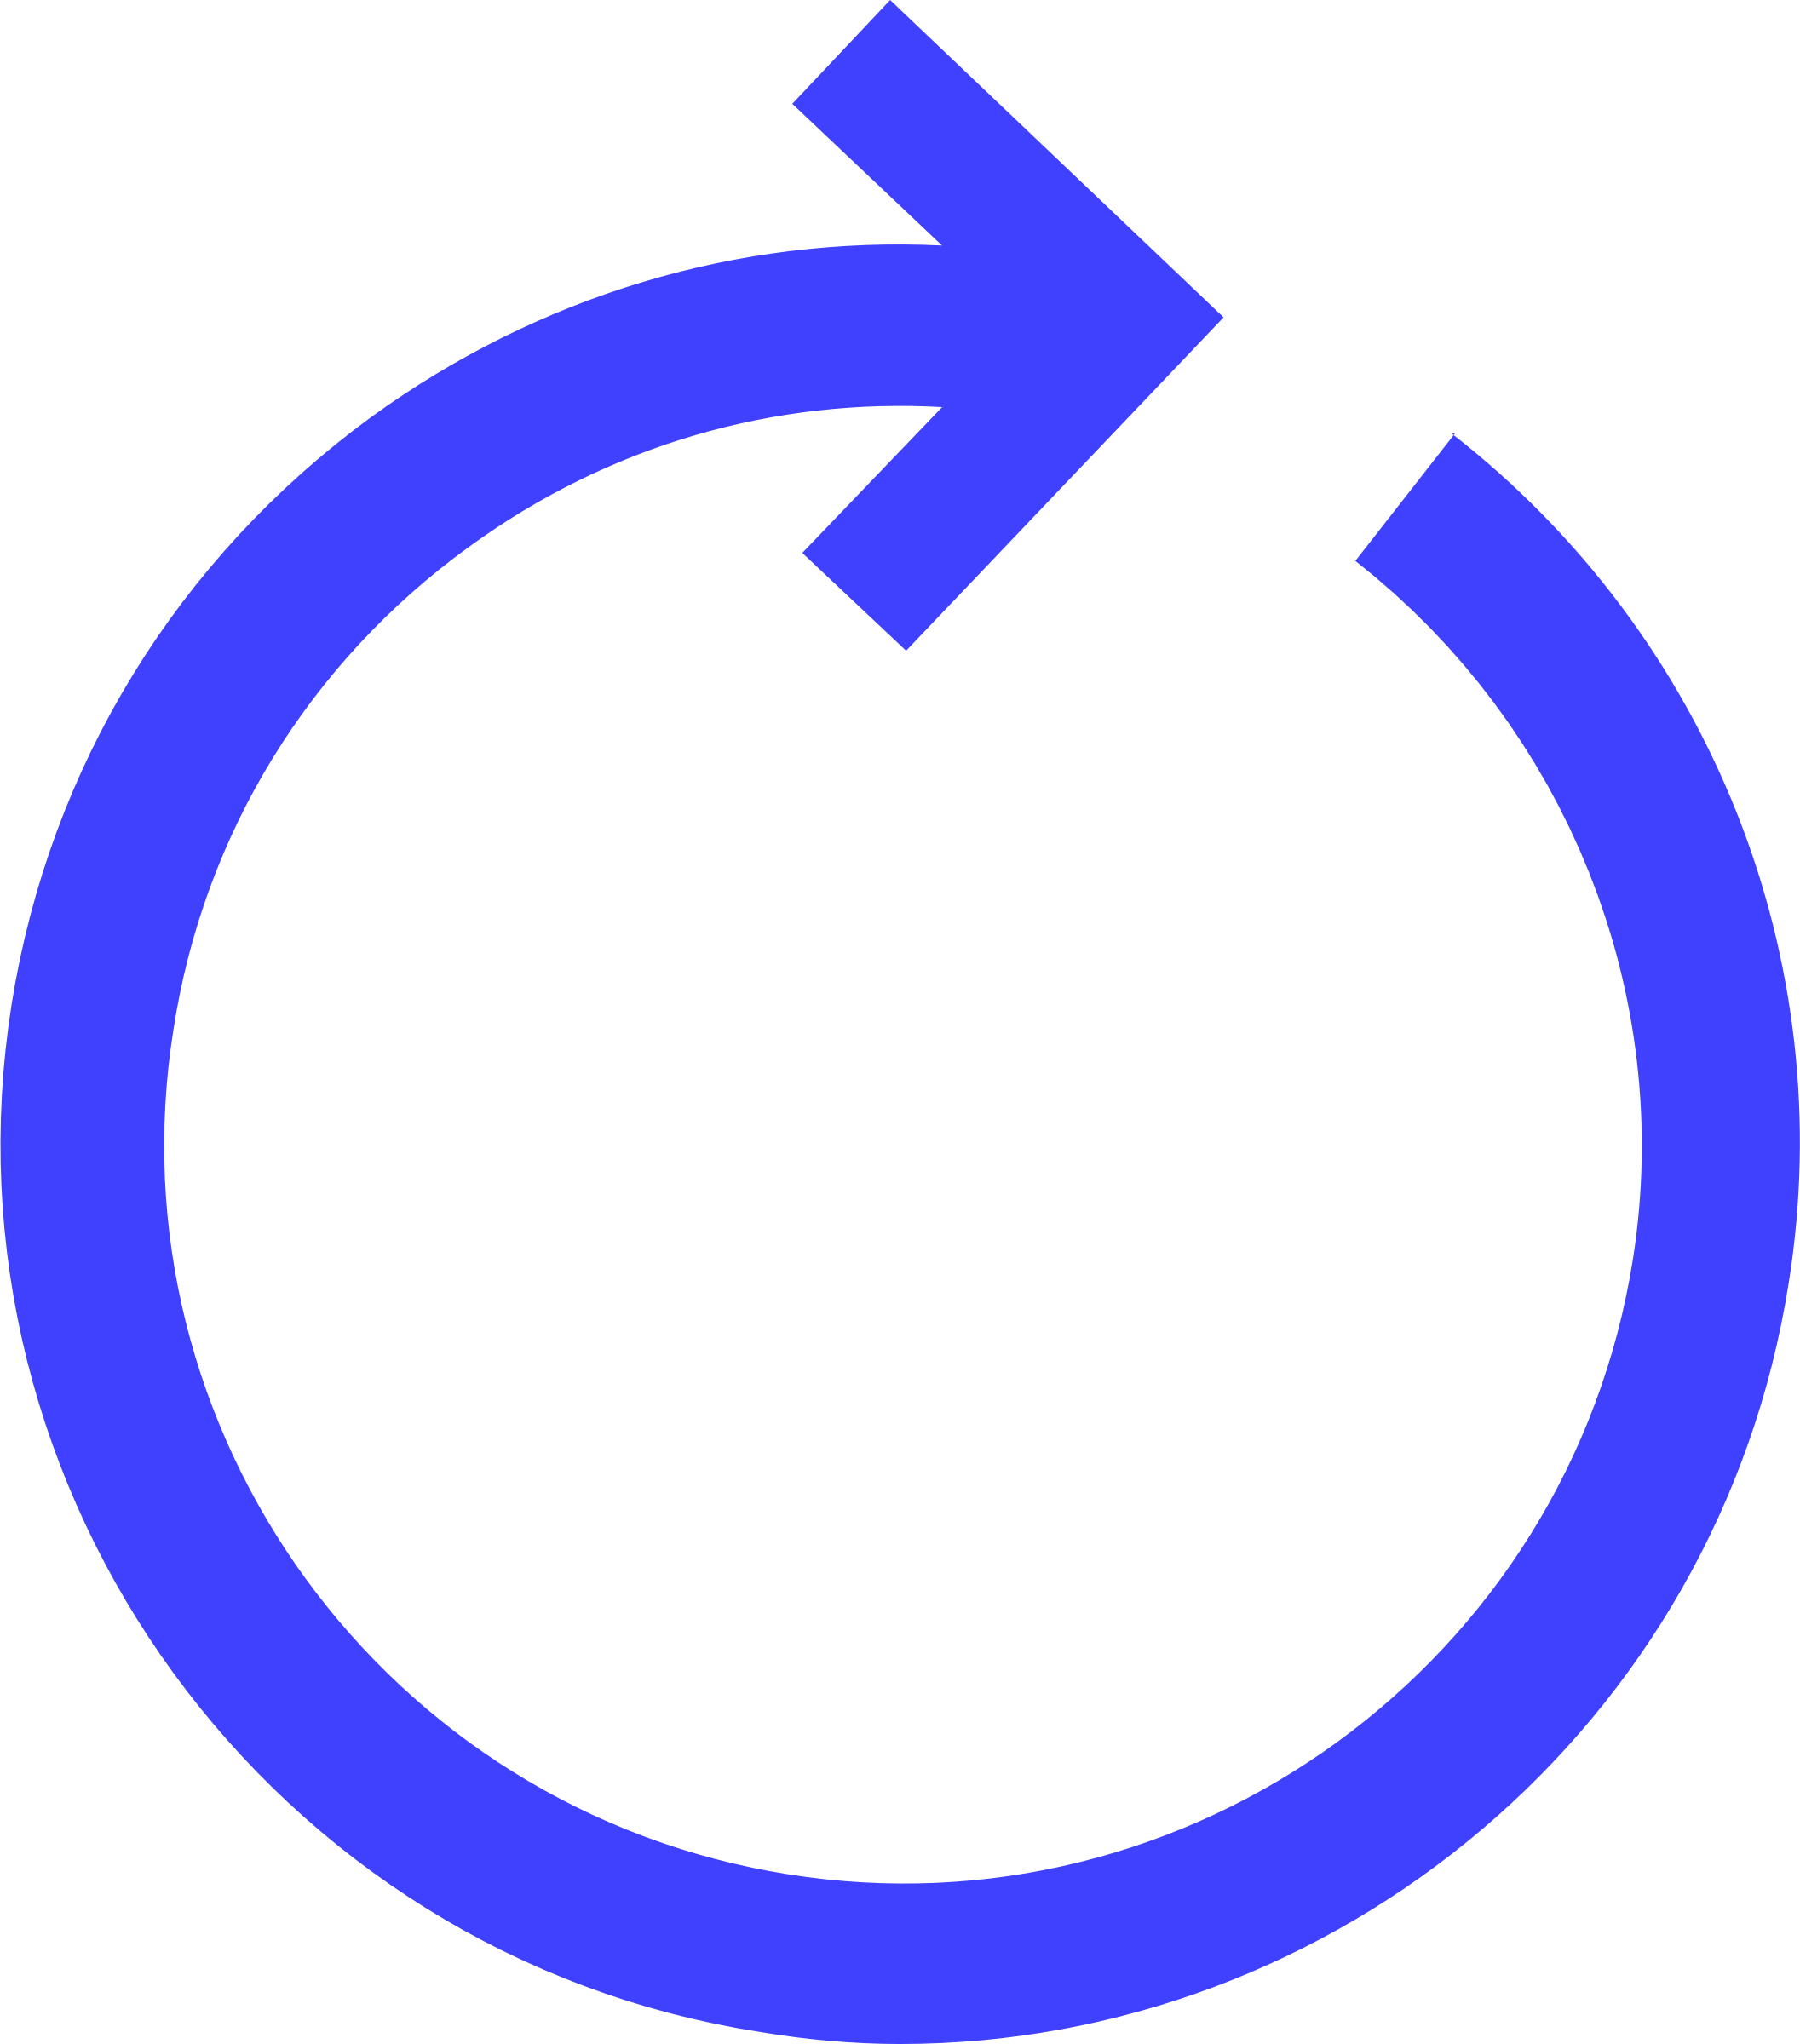 Big Image - Circle Arrow Icon Blue Png (2113x2400)